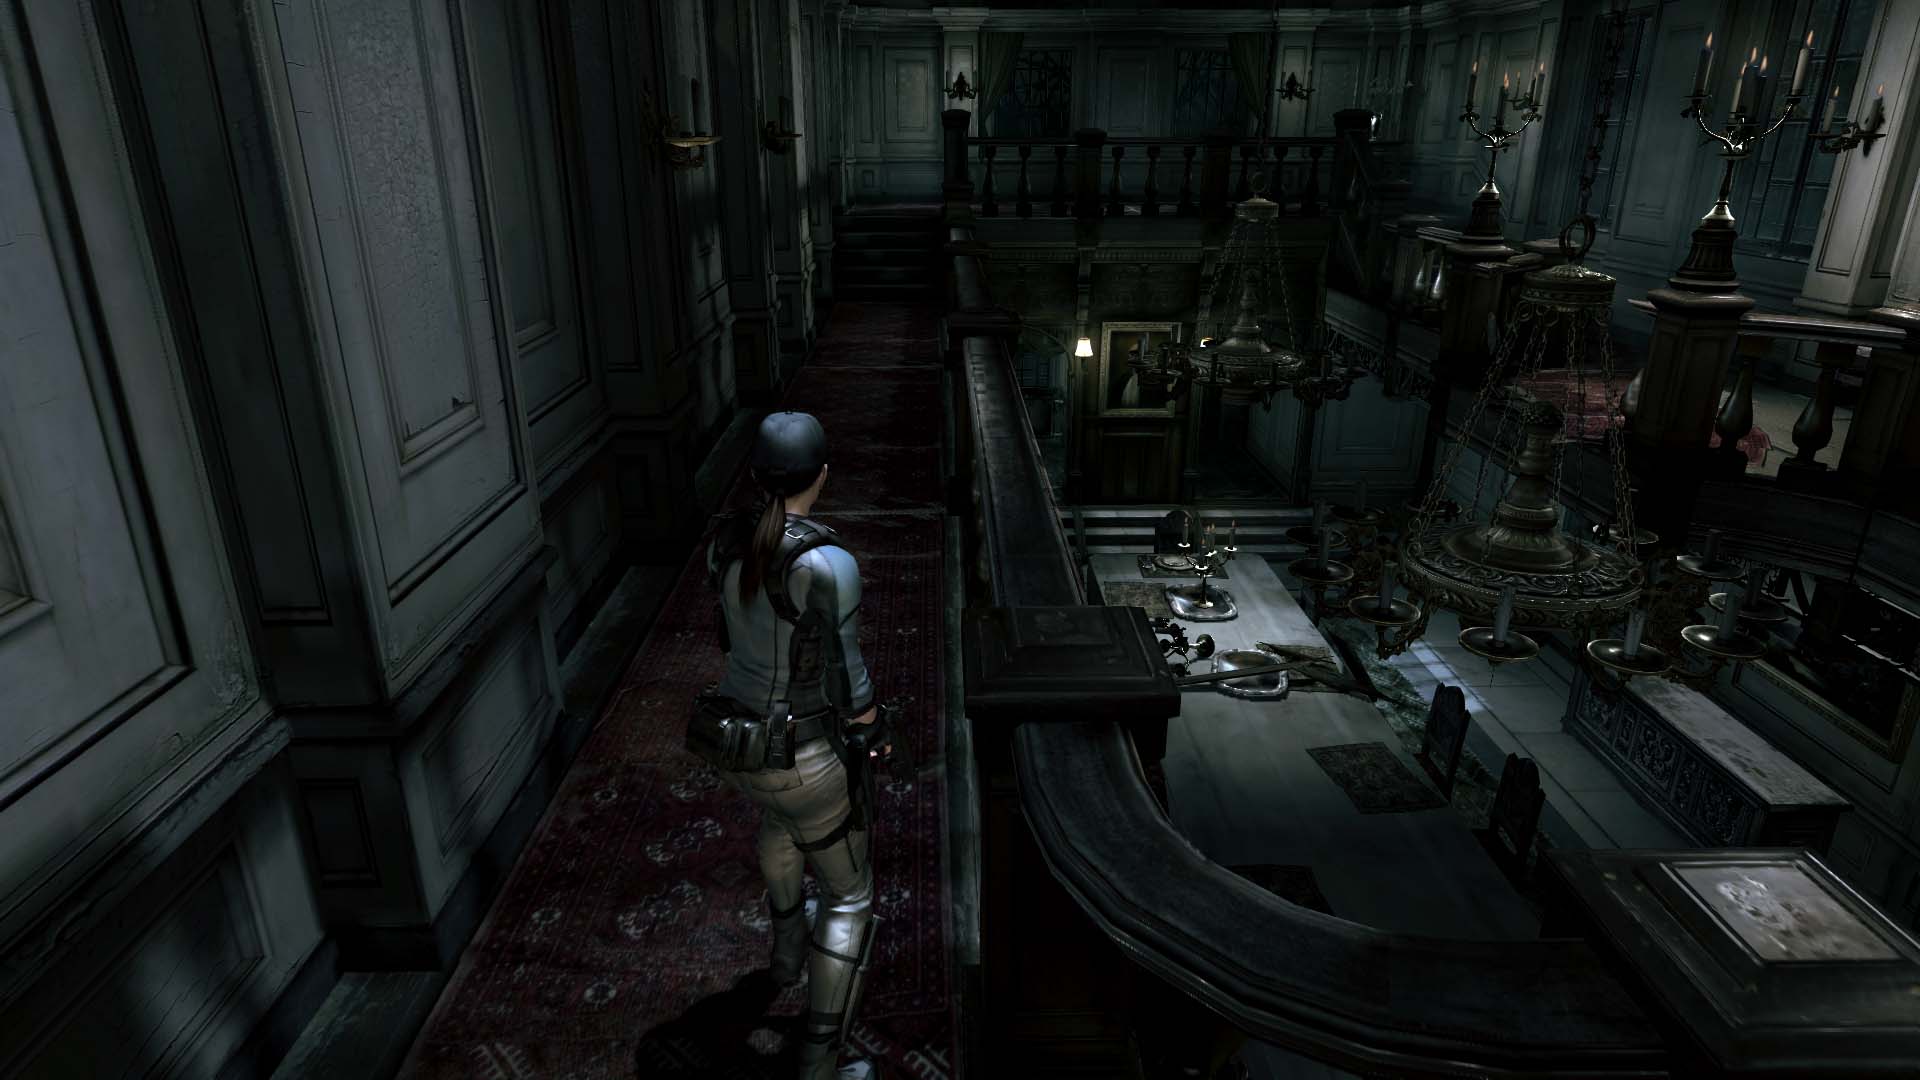 Review: Resident Evil 5 Versus DLC